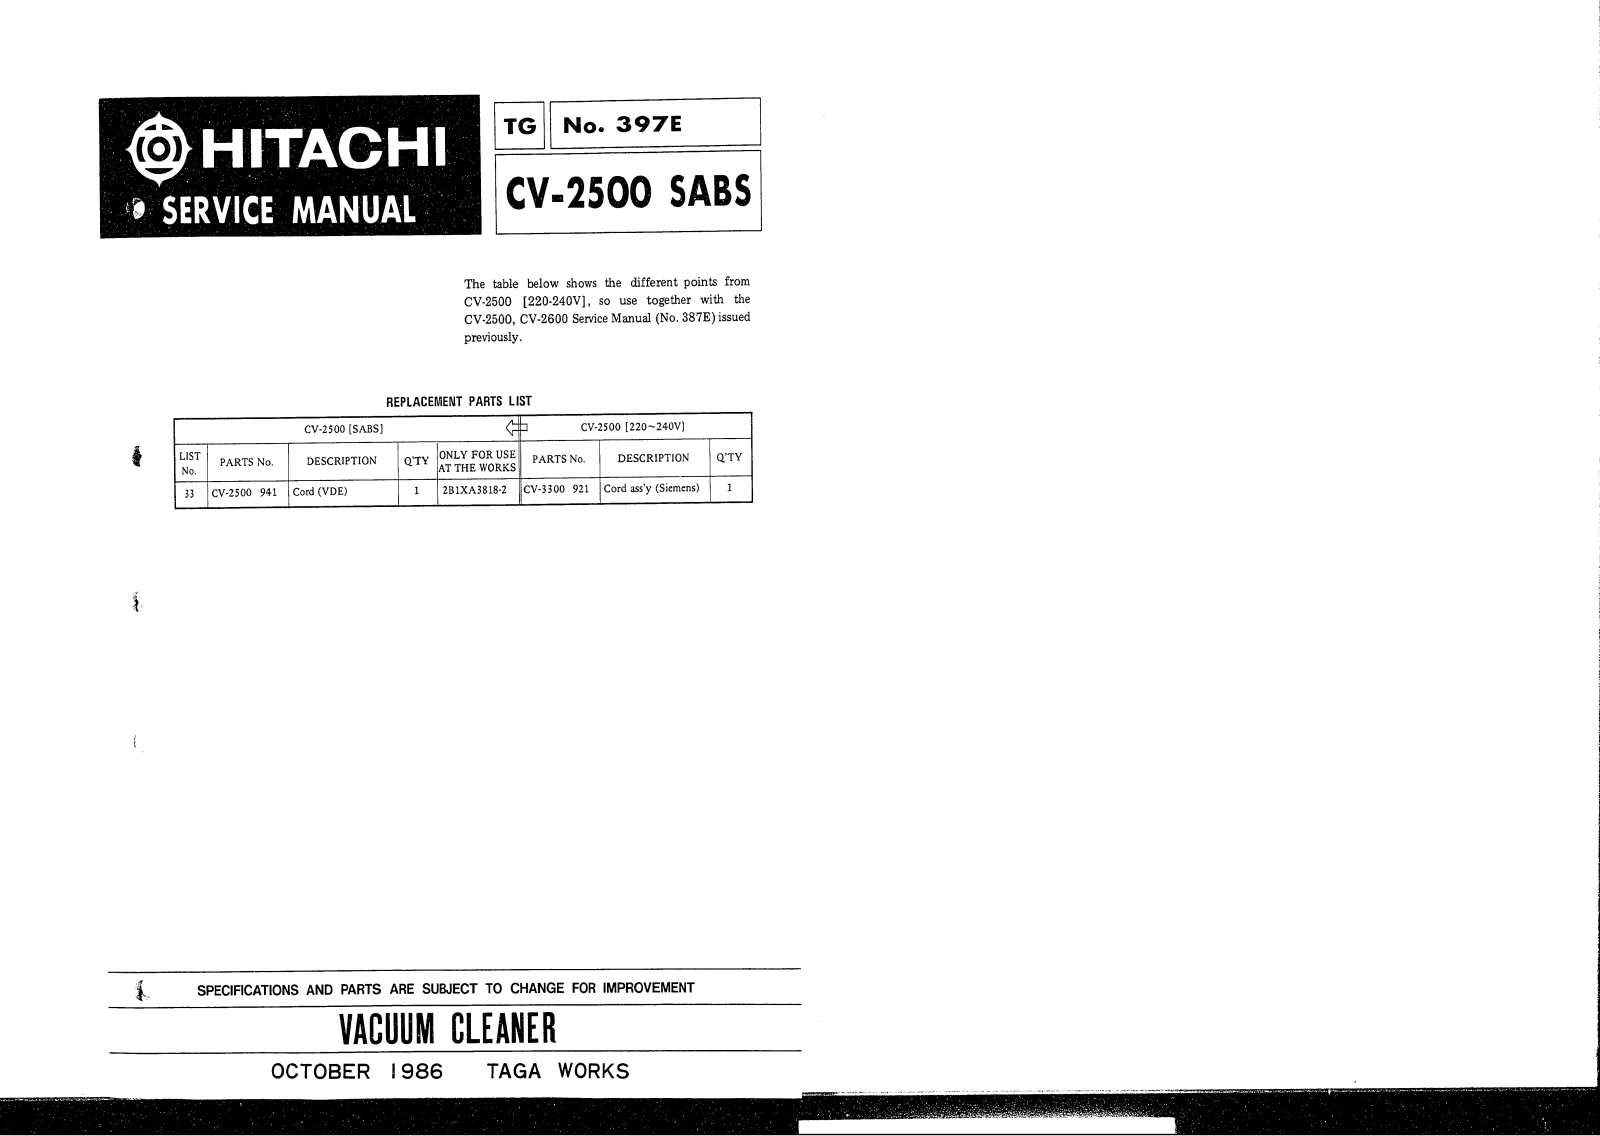 Hitachi CV2500 SABS Service Manual